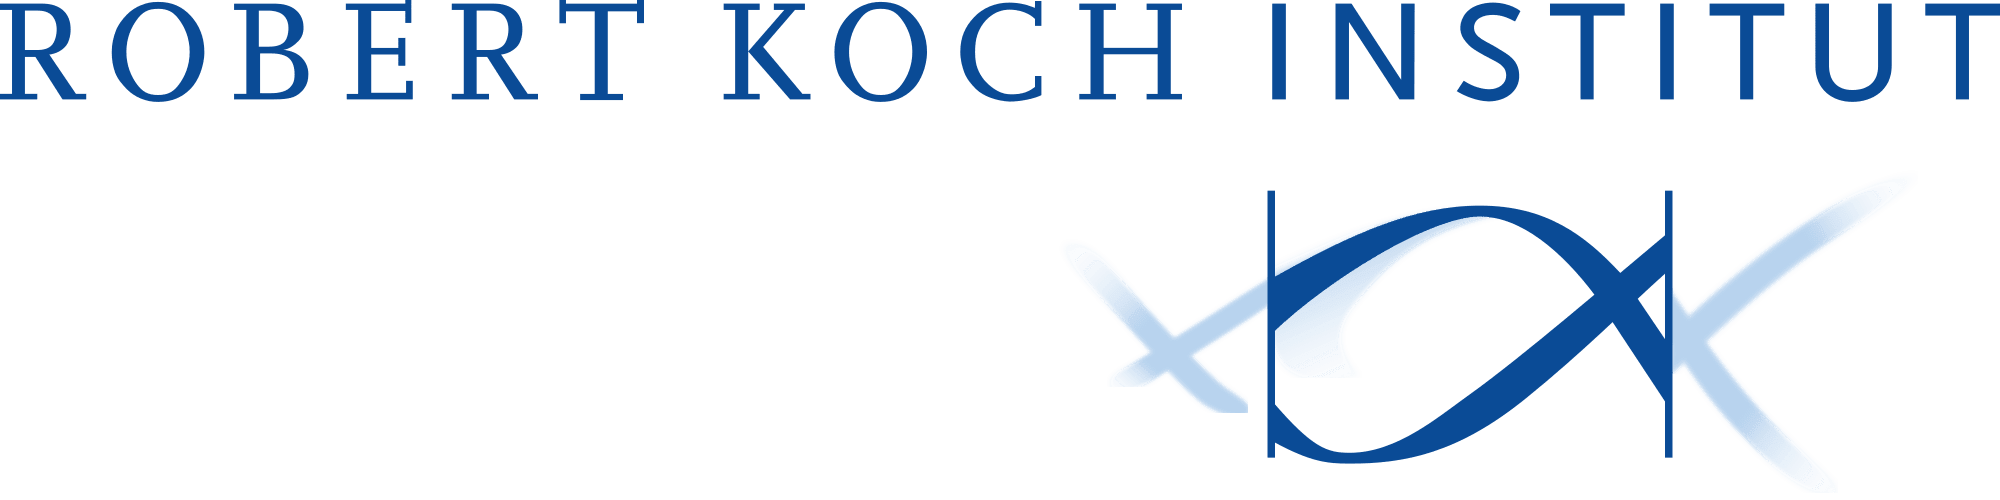 Robert Koch Institut-logo